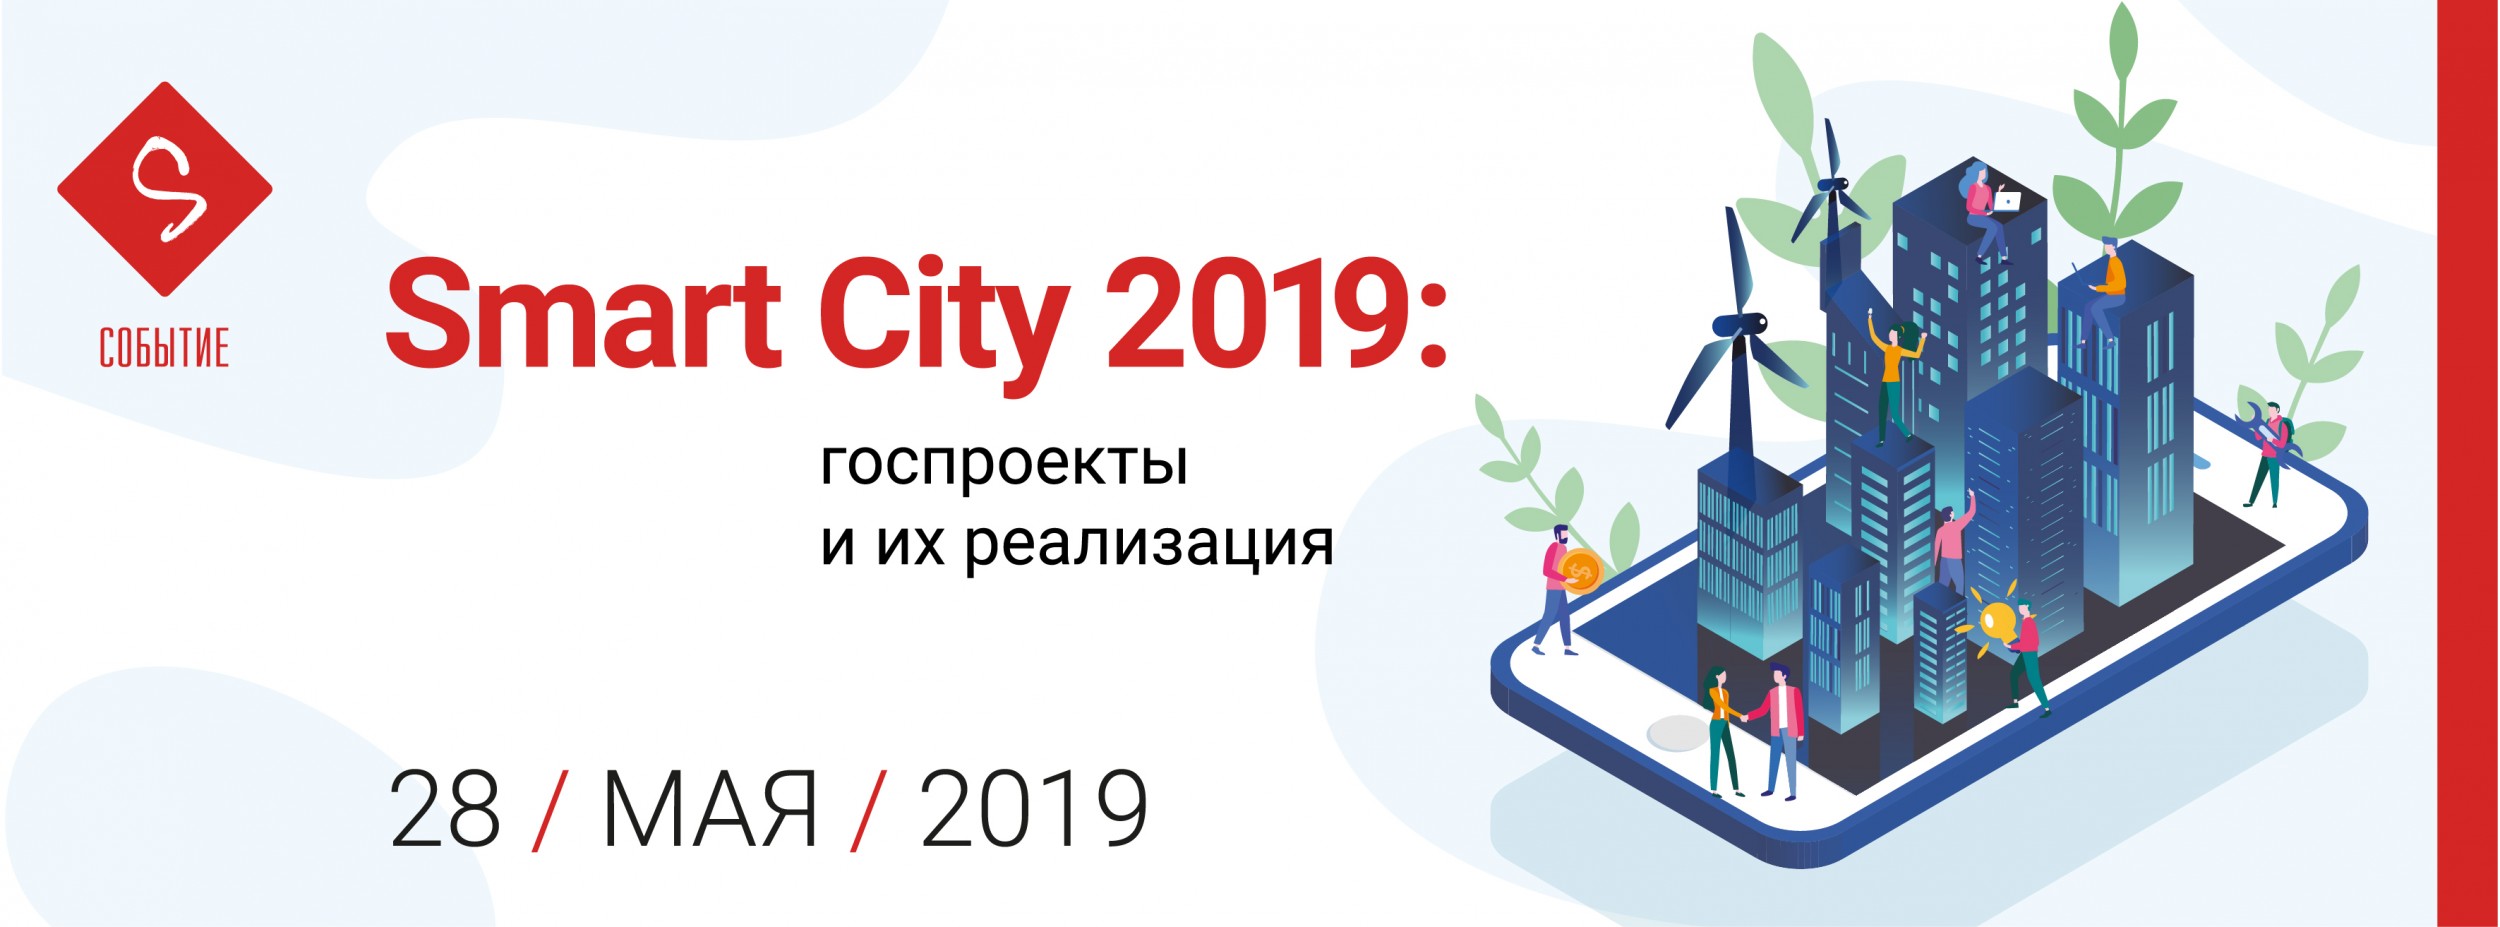   "Smart City 2019:    "